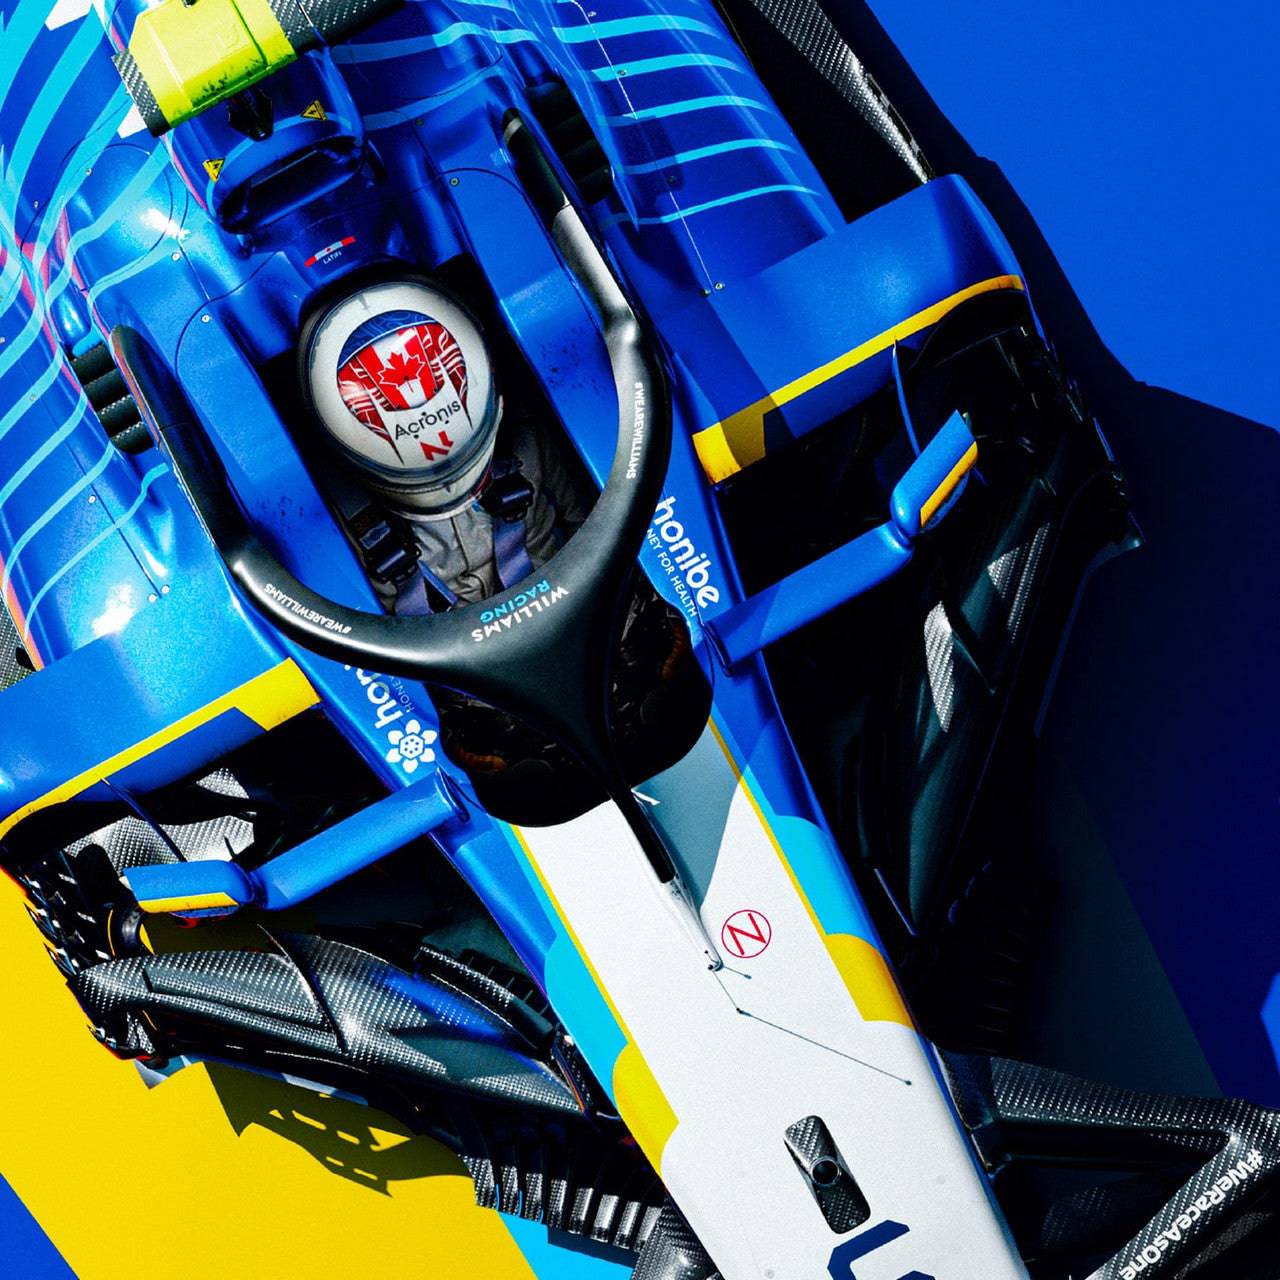 Williams Racing - Nicolas Latifi - 2021 | Limited Edition